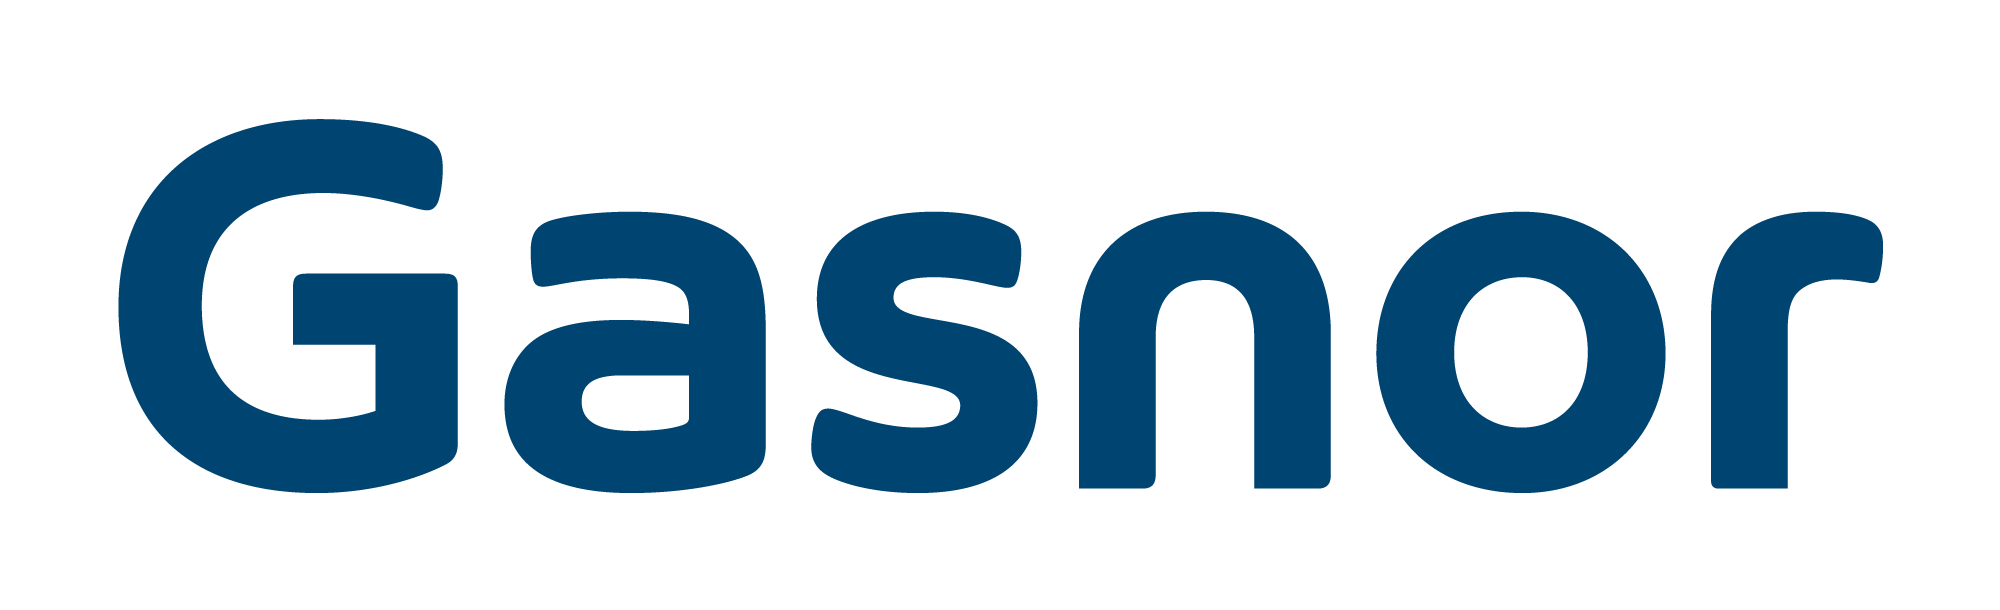 szicom.degnet.logo